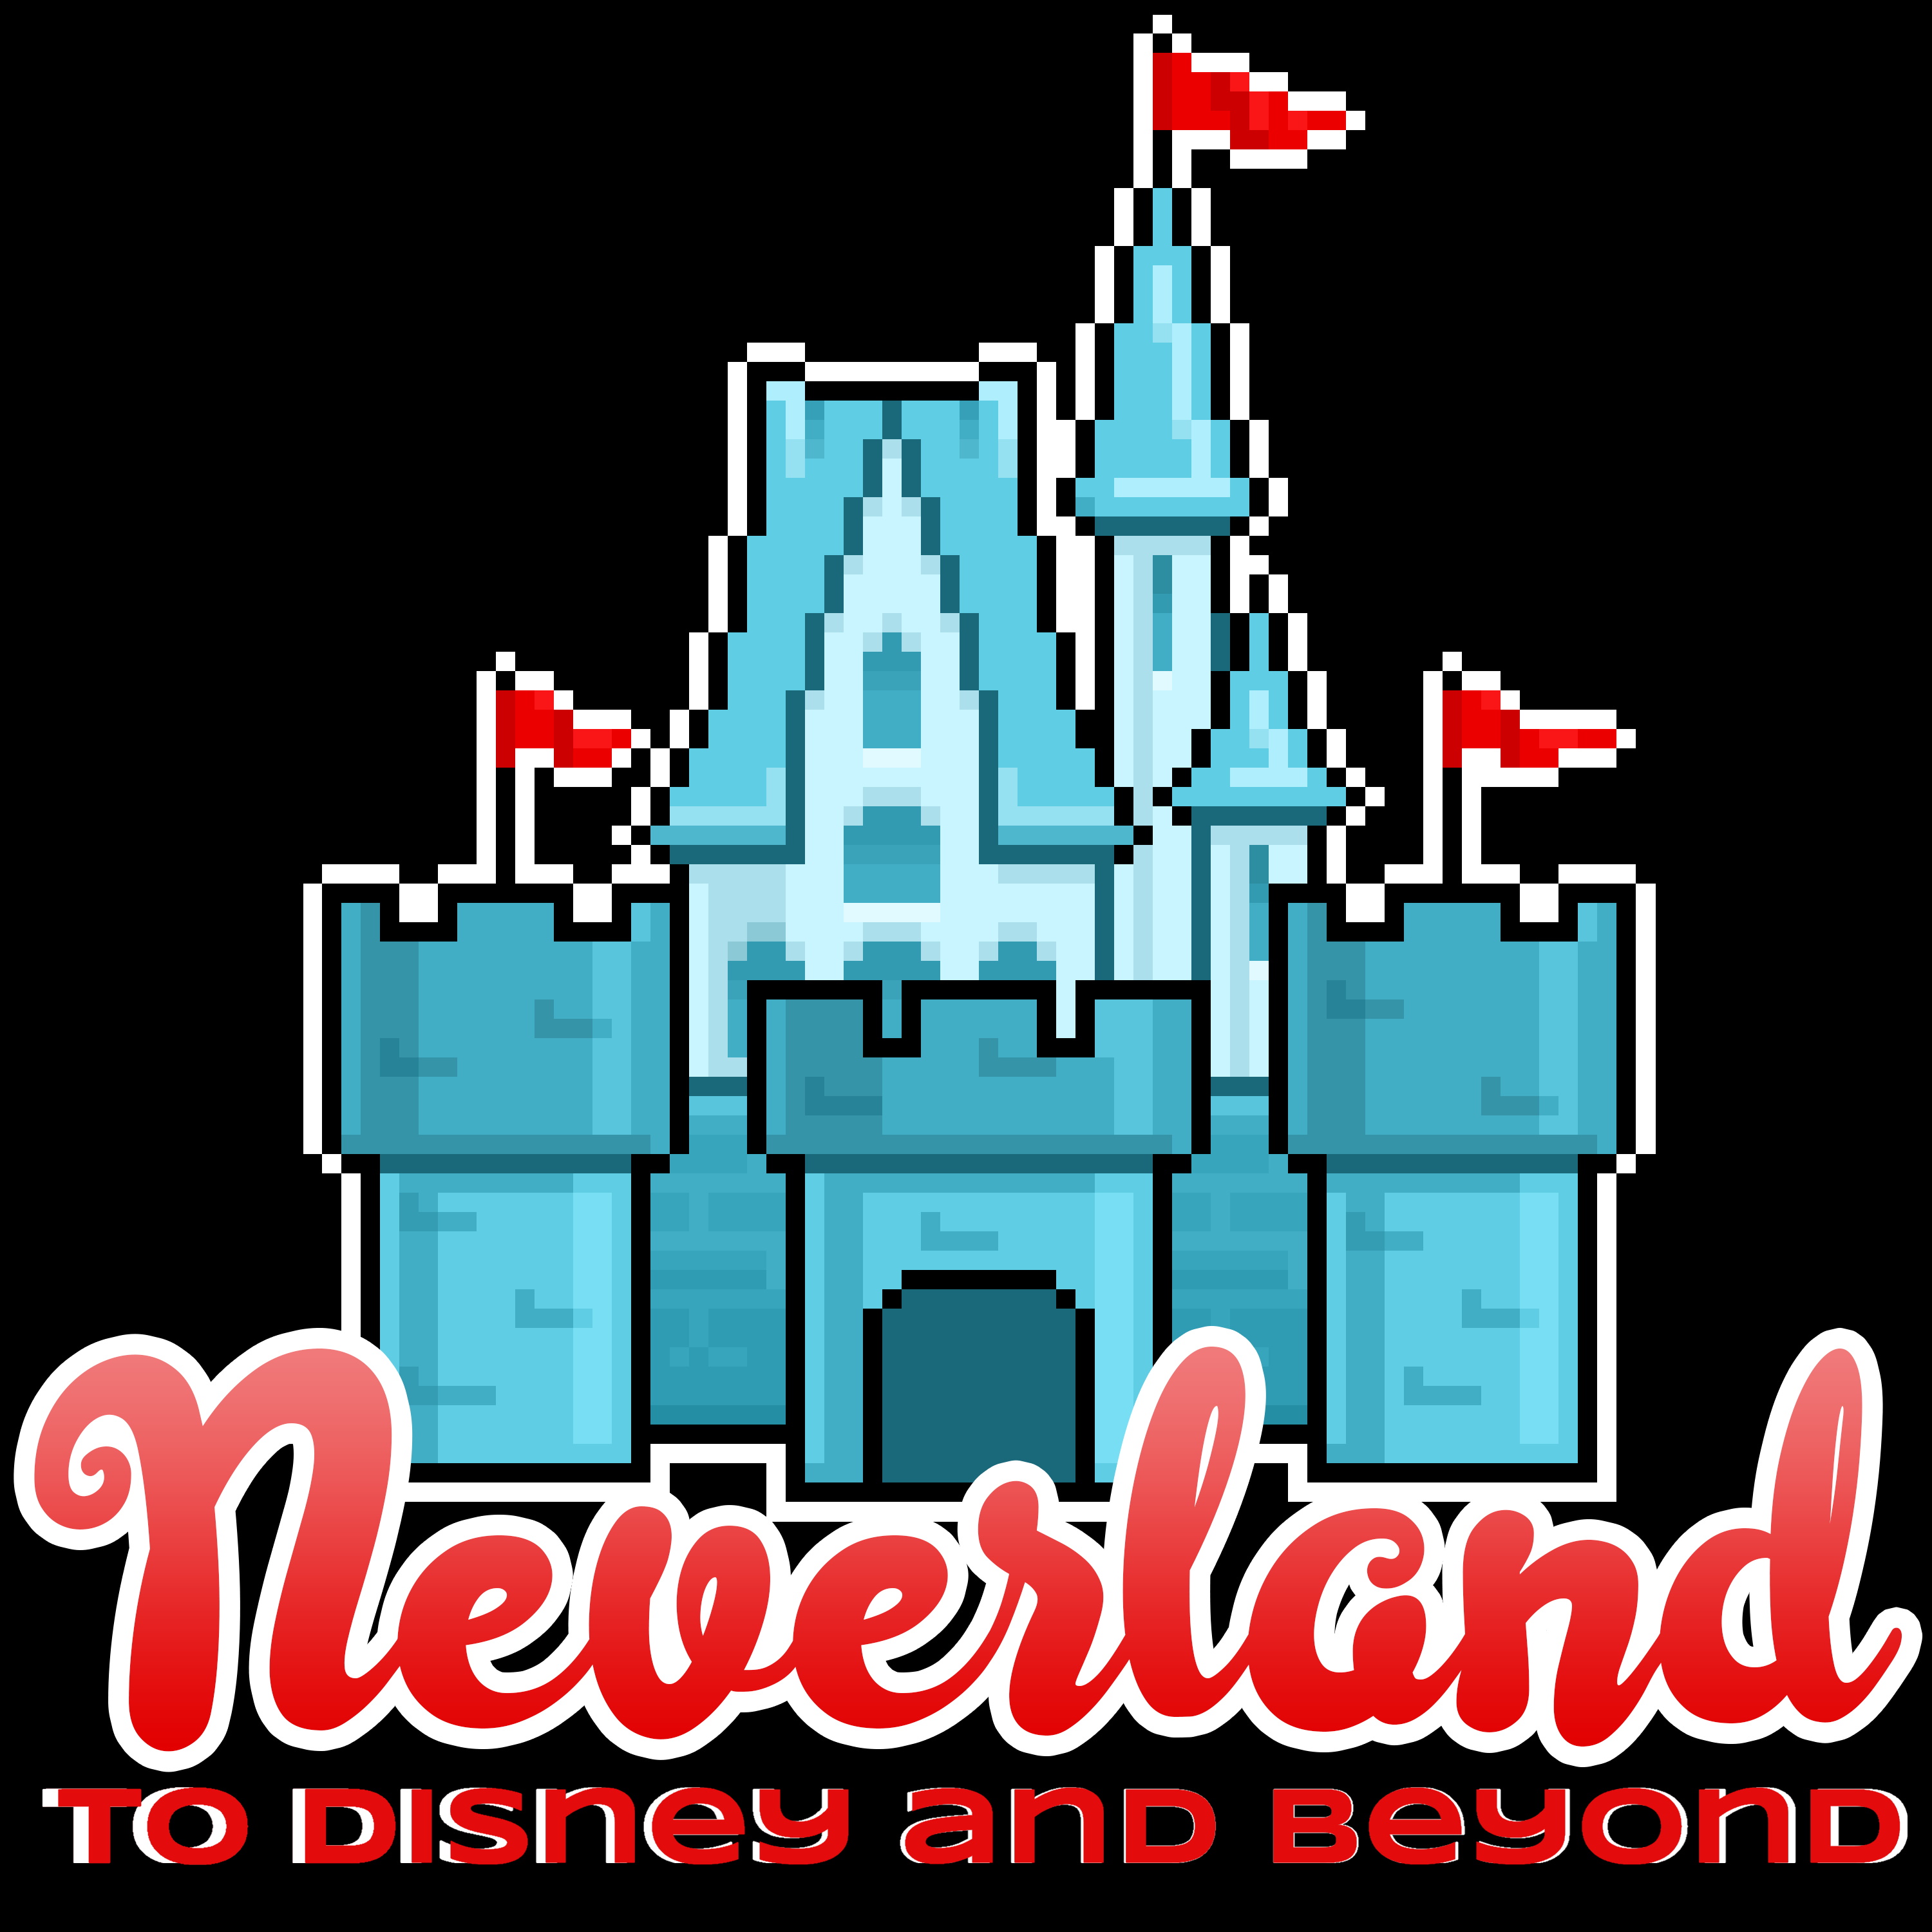 Disney's Bad Week - Neverland 340